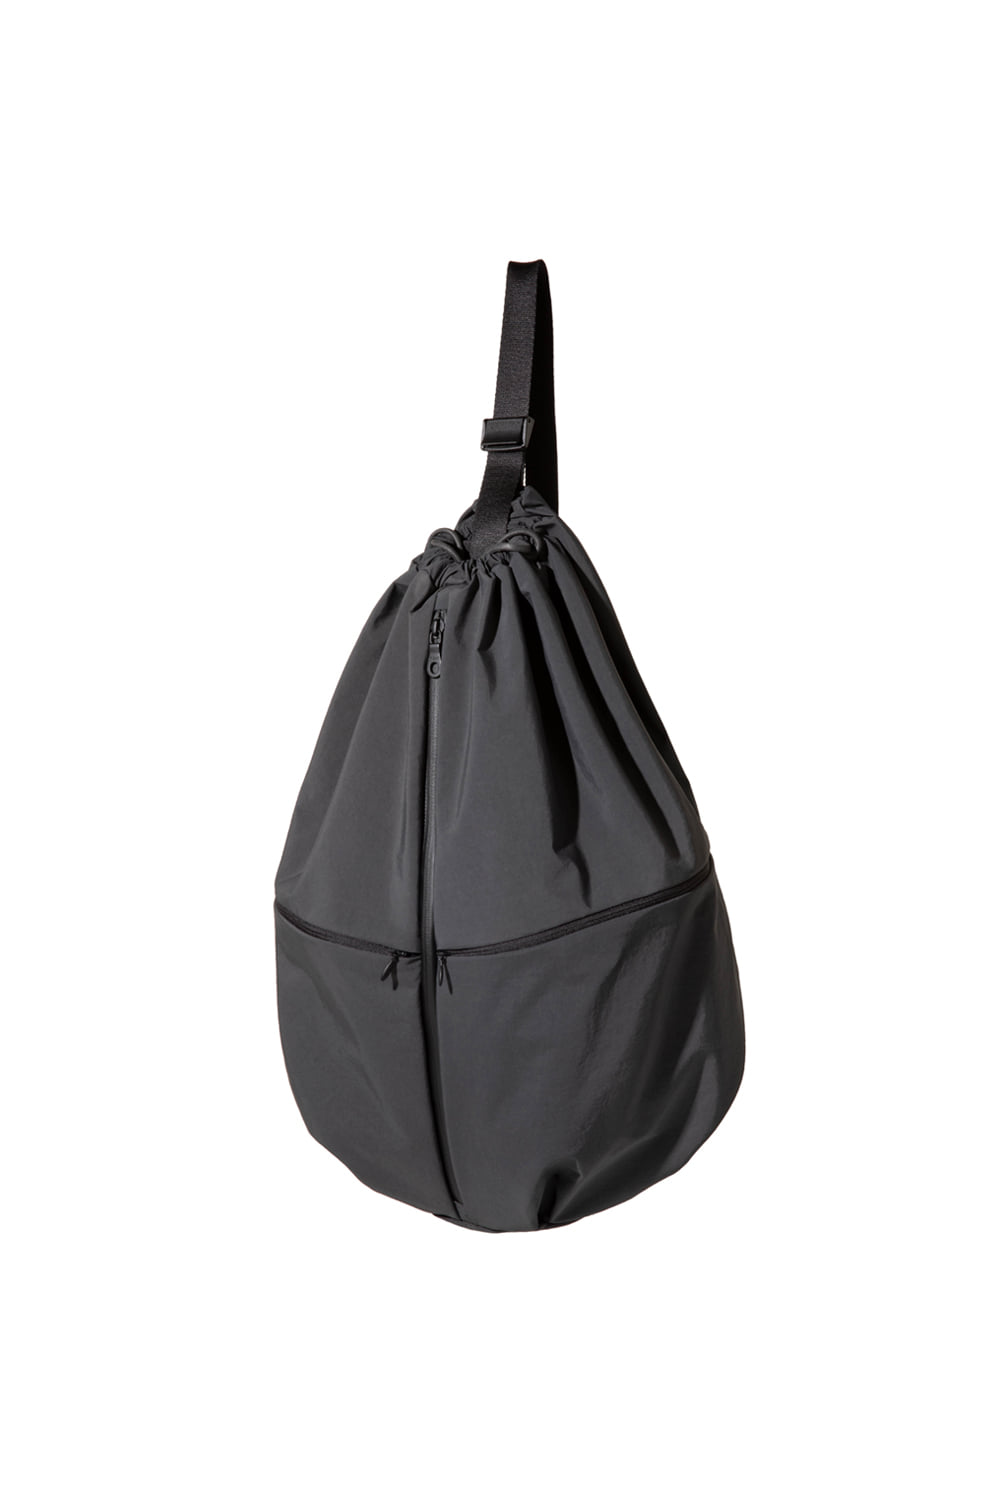 bundle bag (grey)